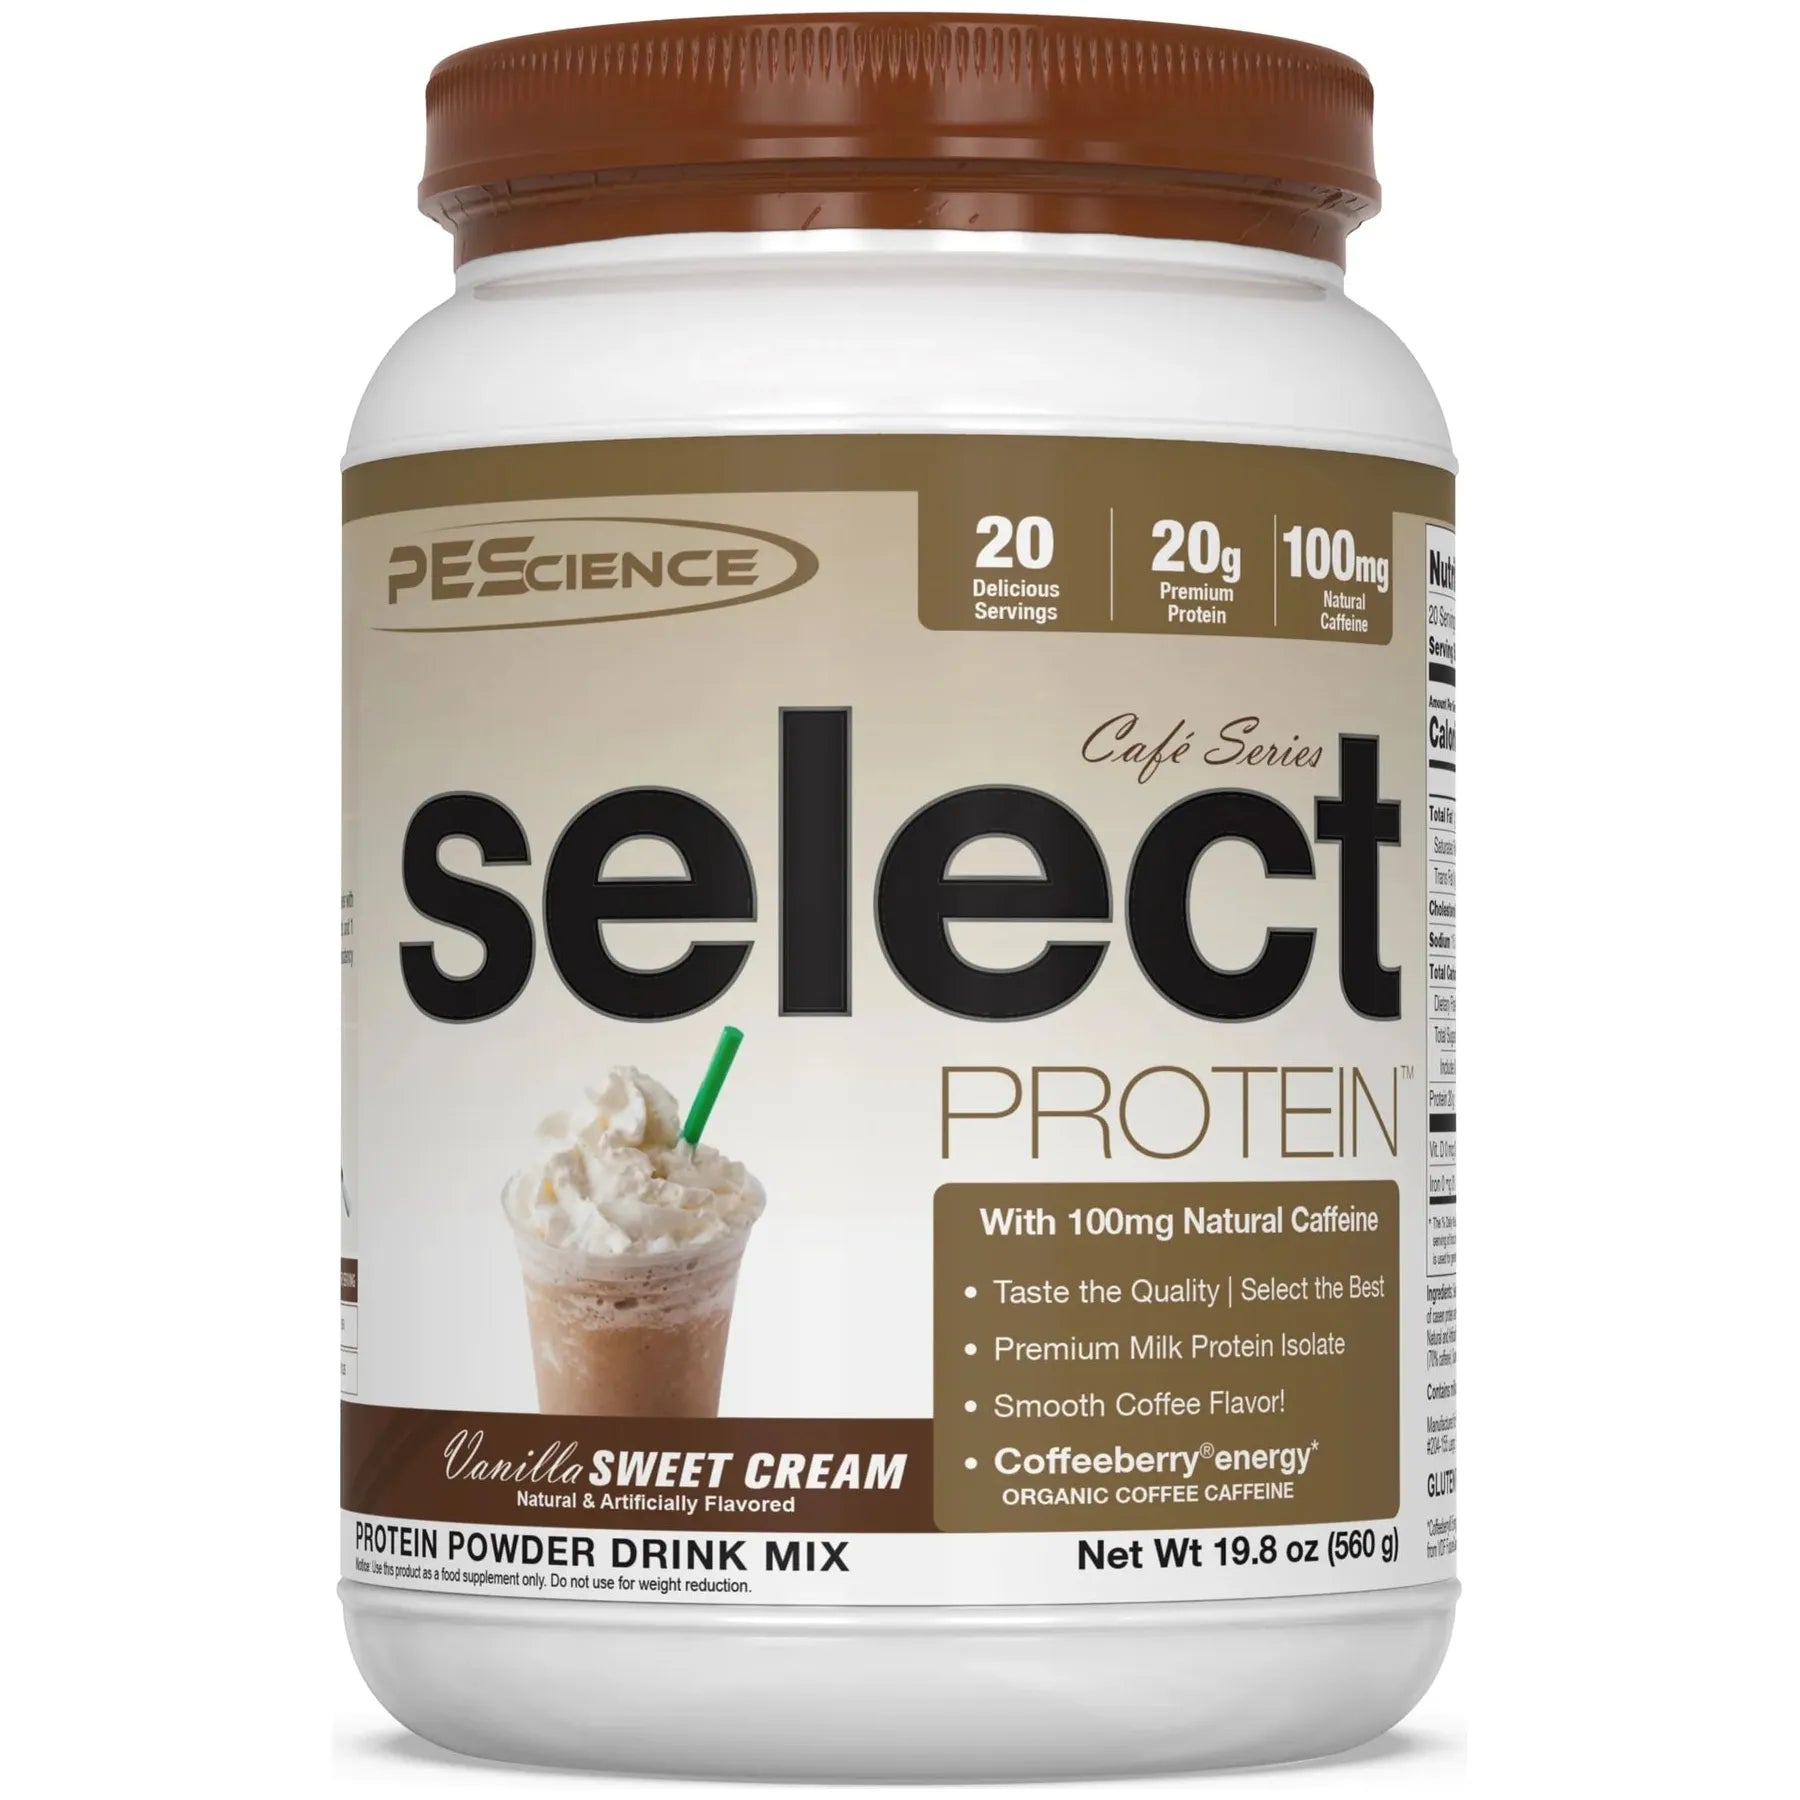 Pescience Select Café Protein (20 servings) pescience-select-cafe-protein-20-servings Whey Protein Blend Vanilla Sweet Cream PEScience